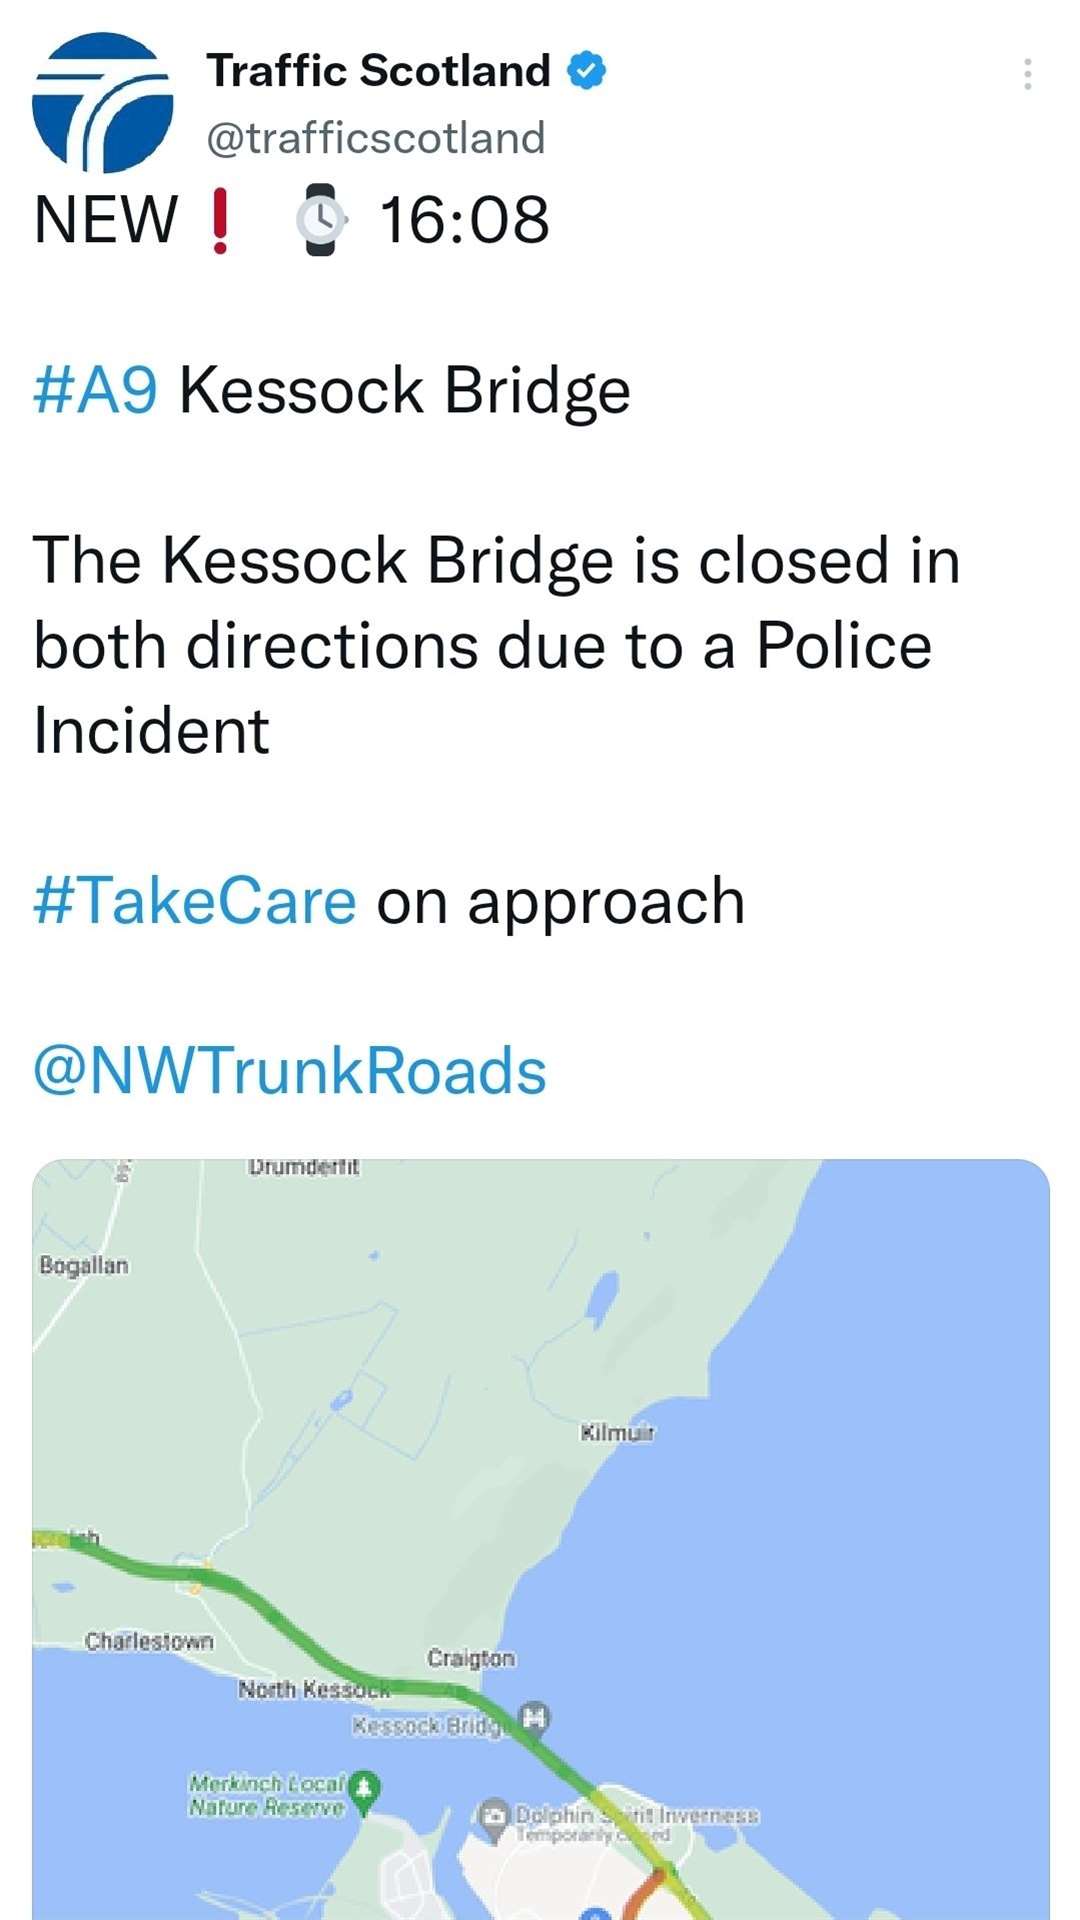 Traffic Scotland alert